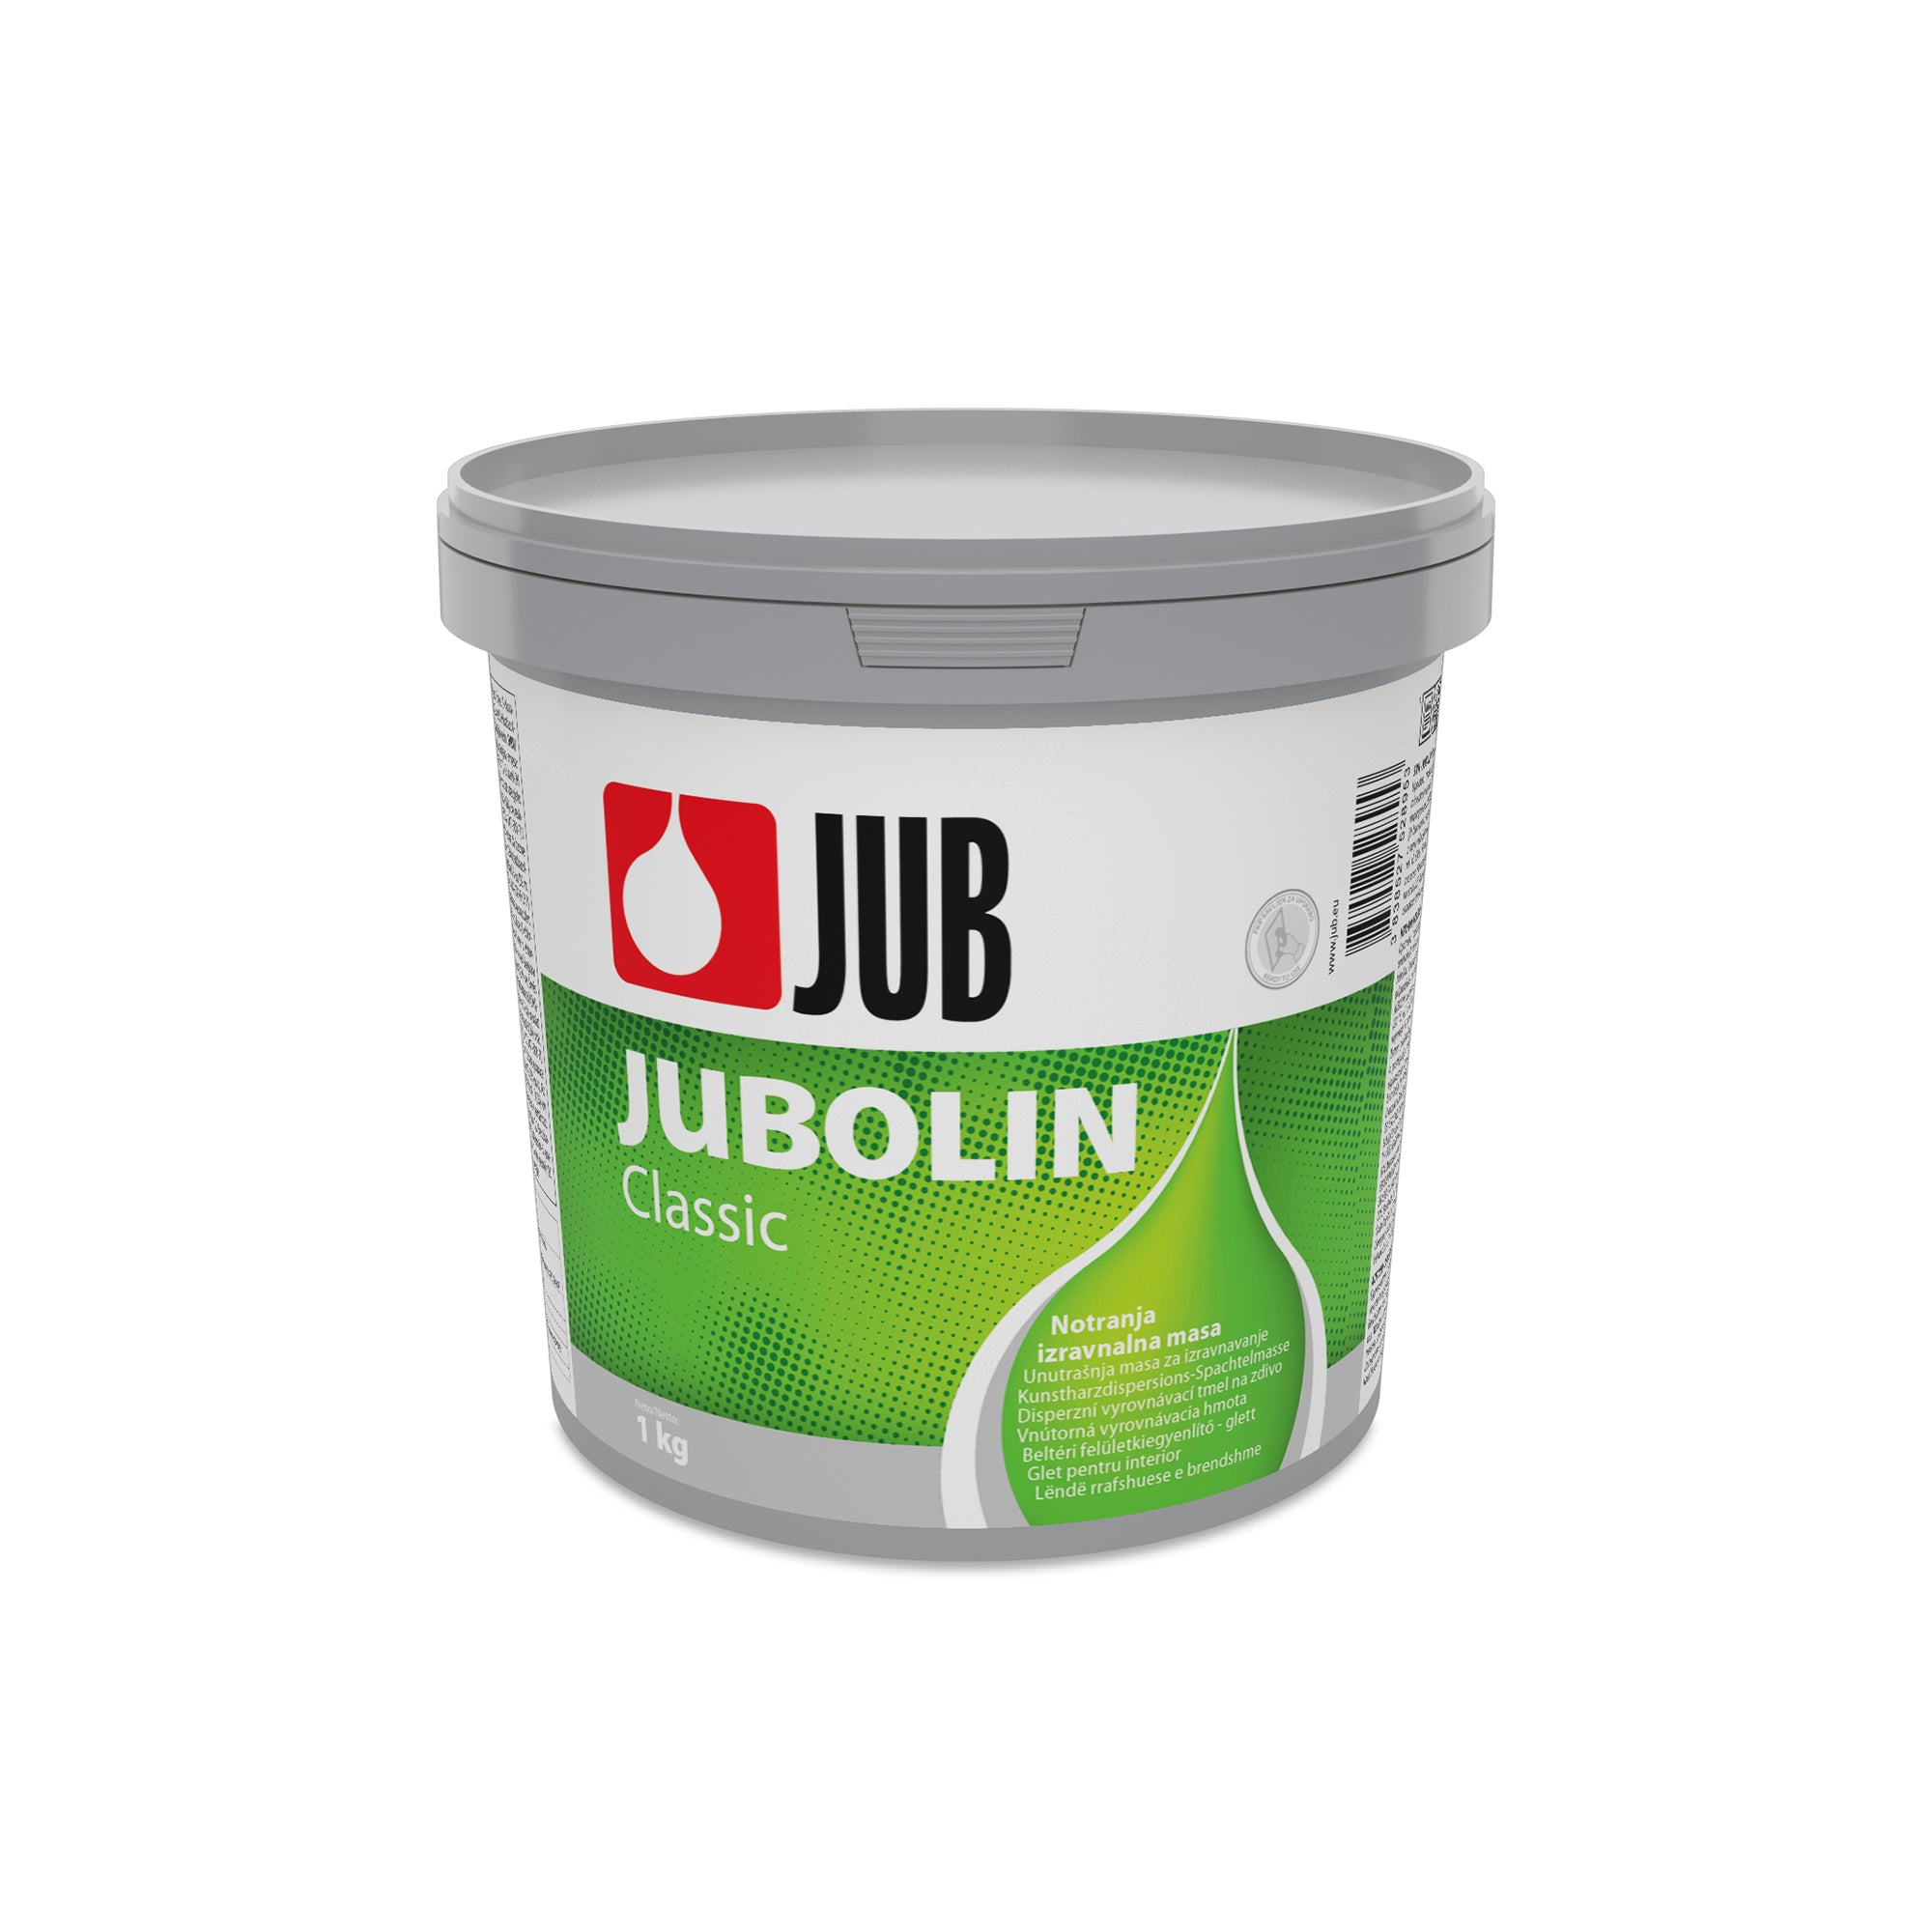 JUB JUBOLIN Classic disperzní stěrkový tmel na zdivo 1 kg